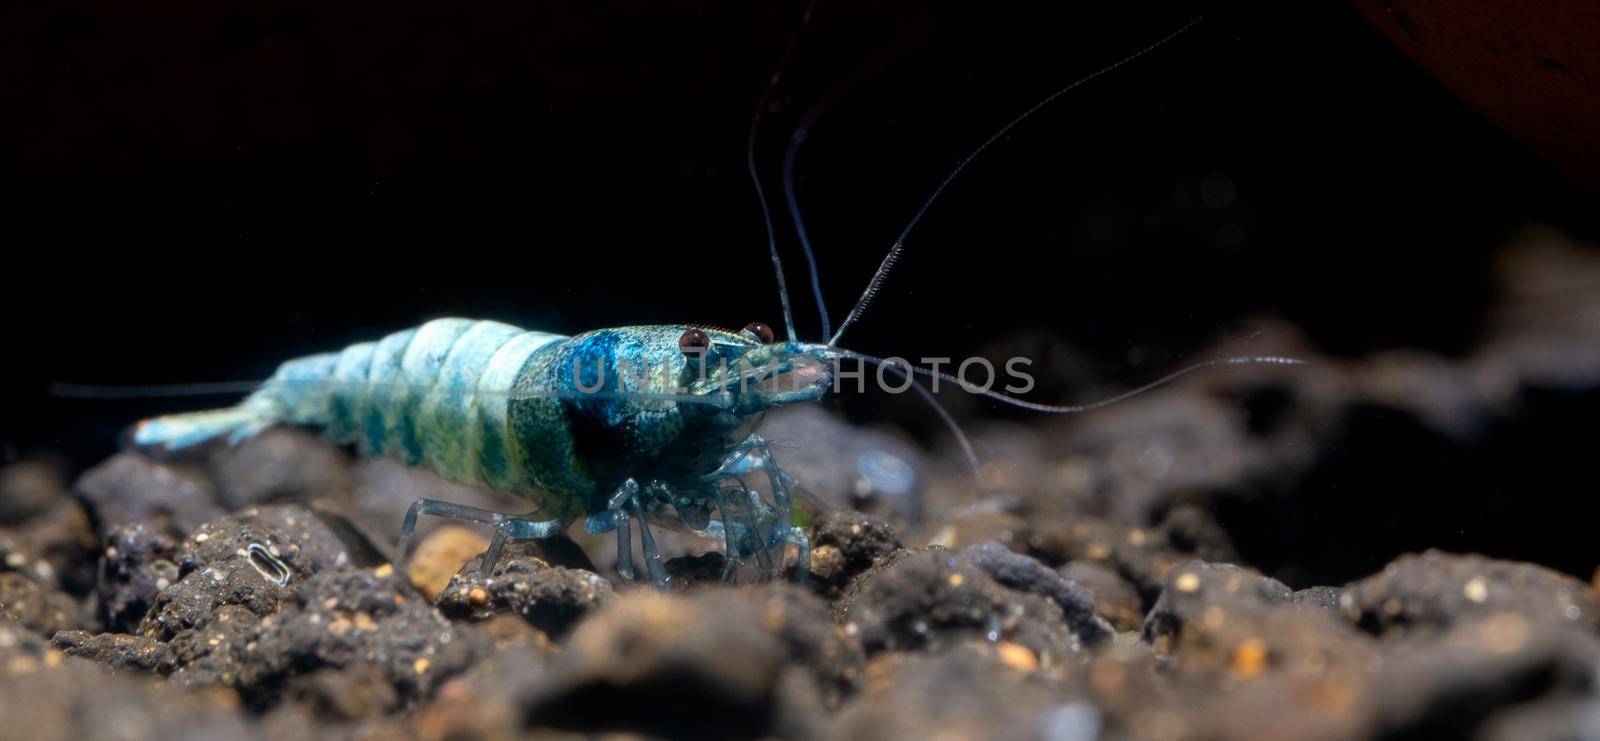 Blue bolt dwarf shrimp look for food in aquatic soil with dark background in freshwater aquarium tank.